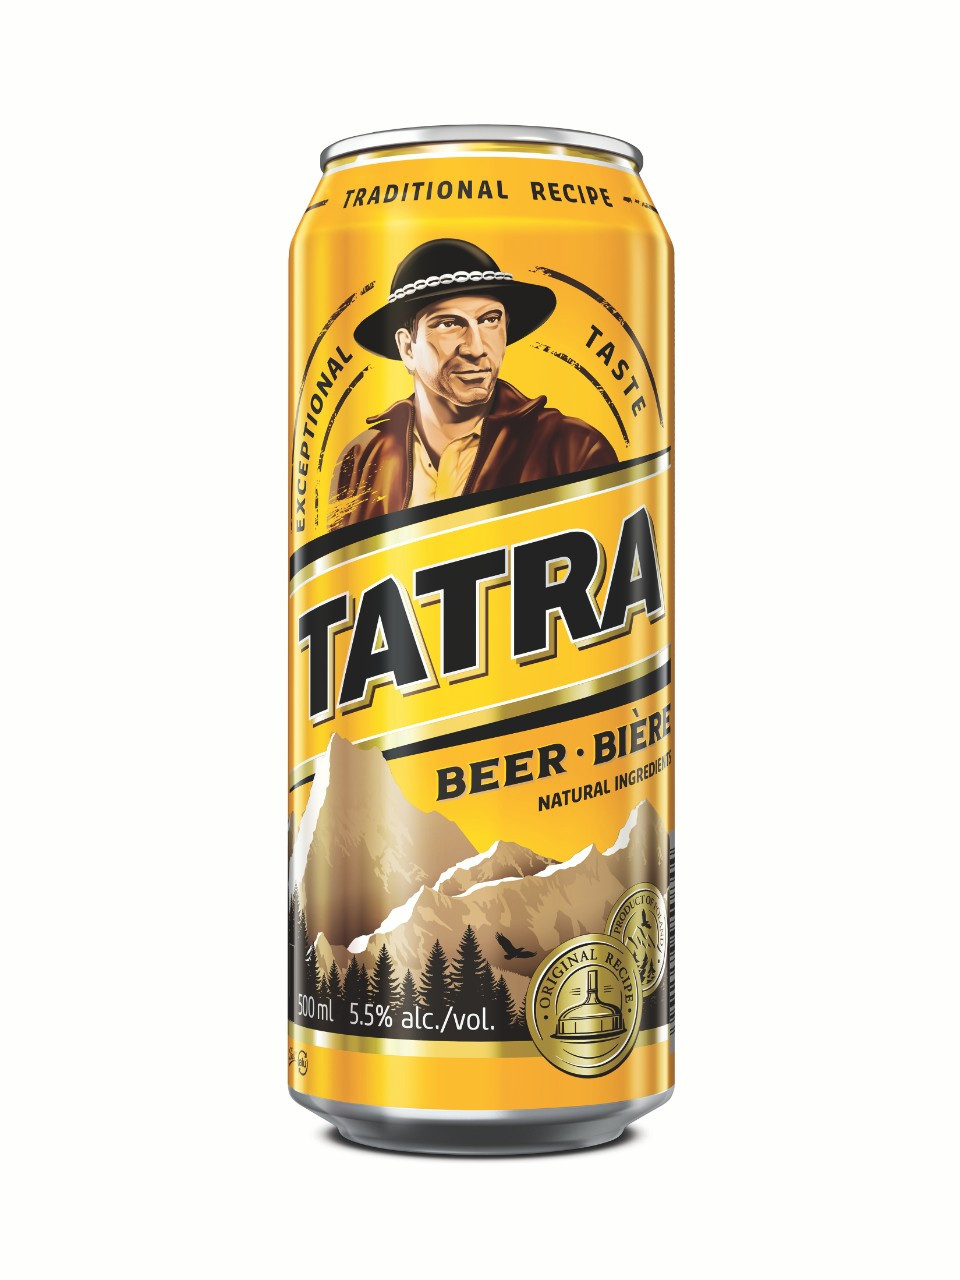 Tatra beer 500 ml